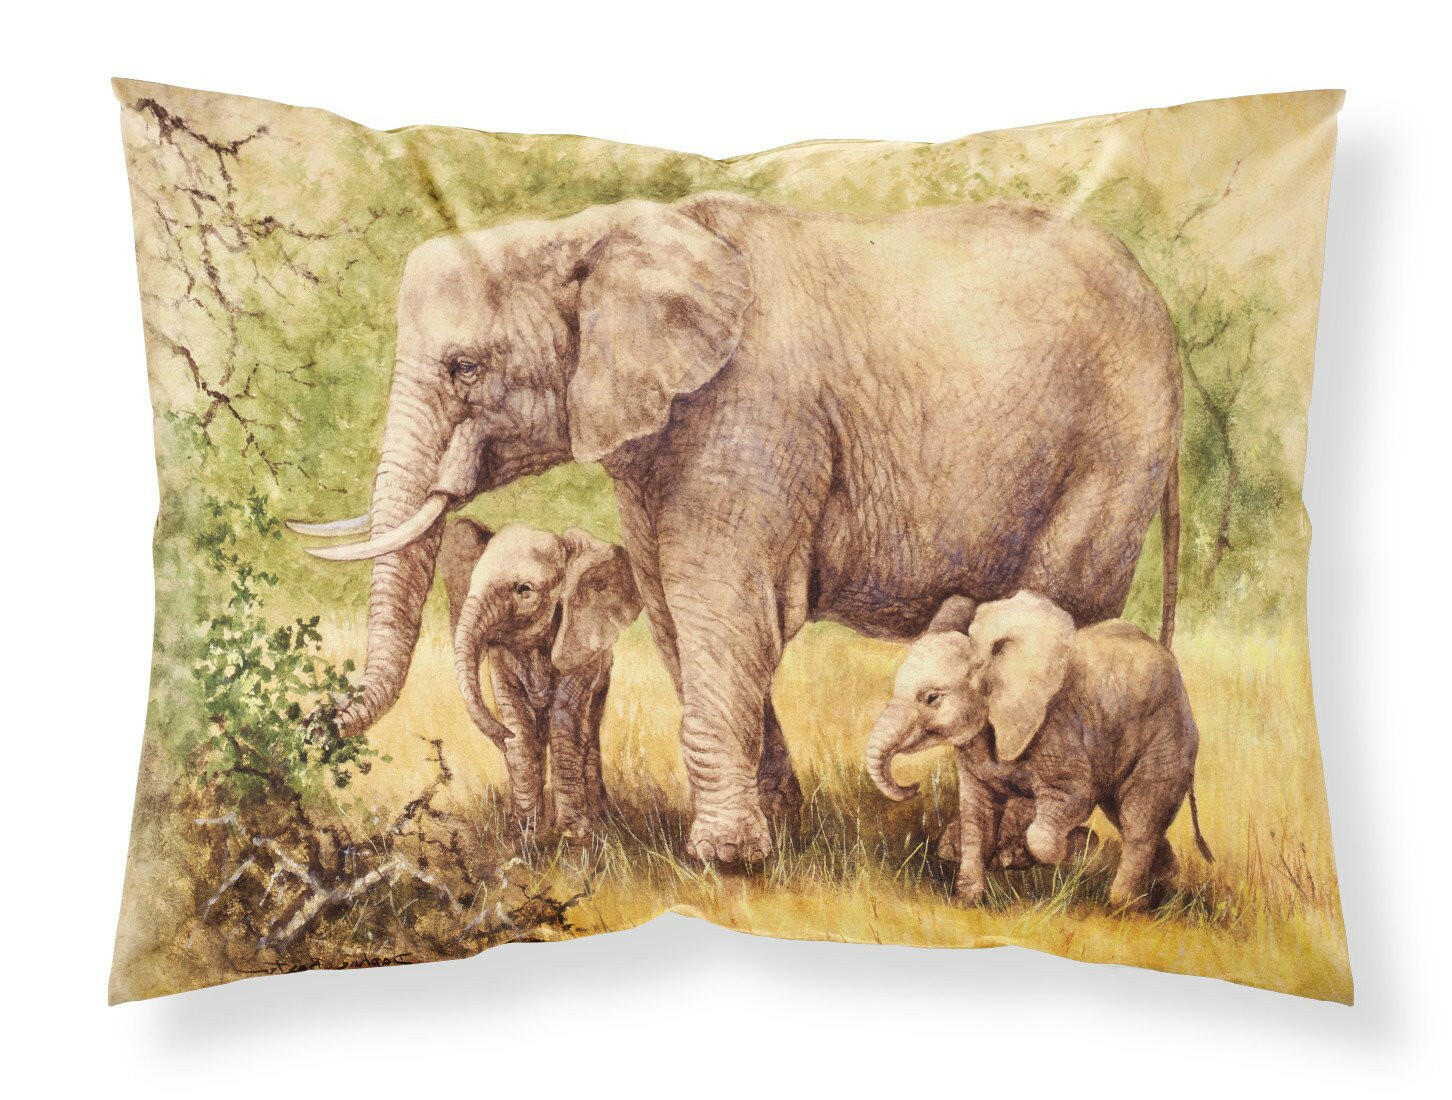 Elephants by Daphne Baxter Fabric Standard Pillowcase BDBA0112PILLOWCASE by Caroline's Treasures